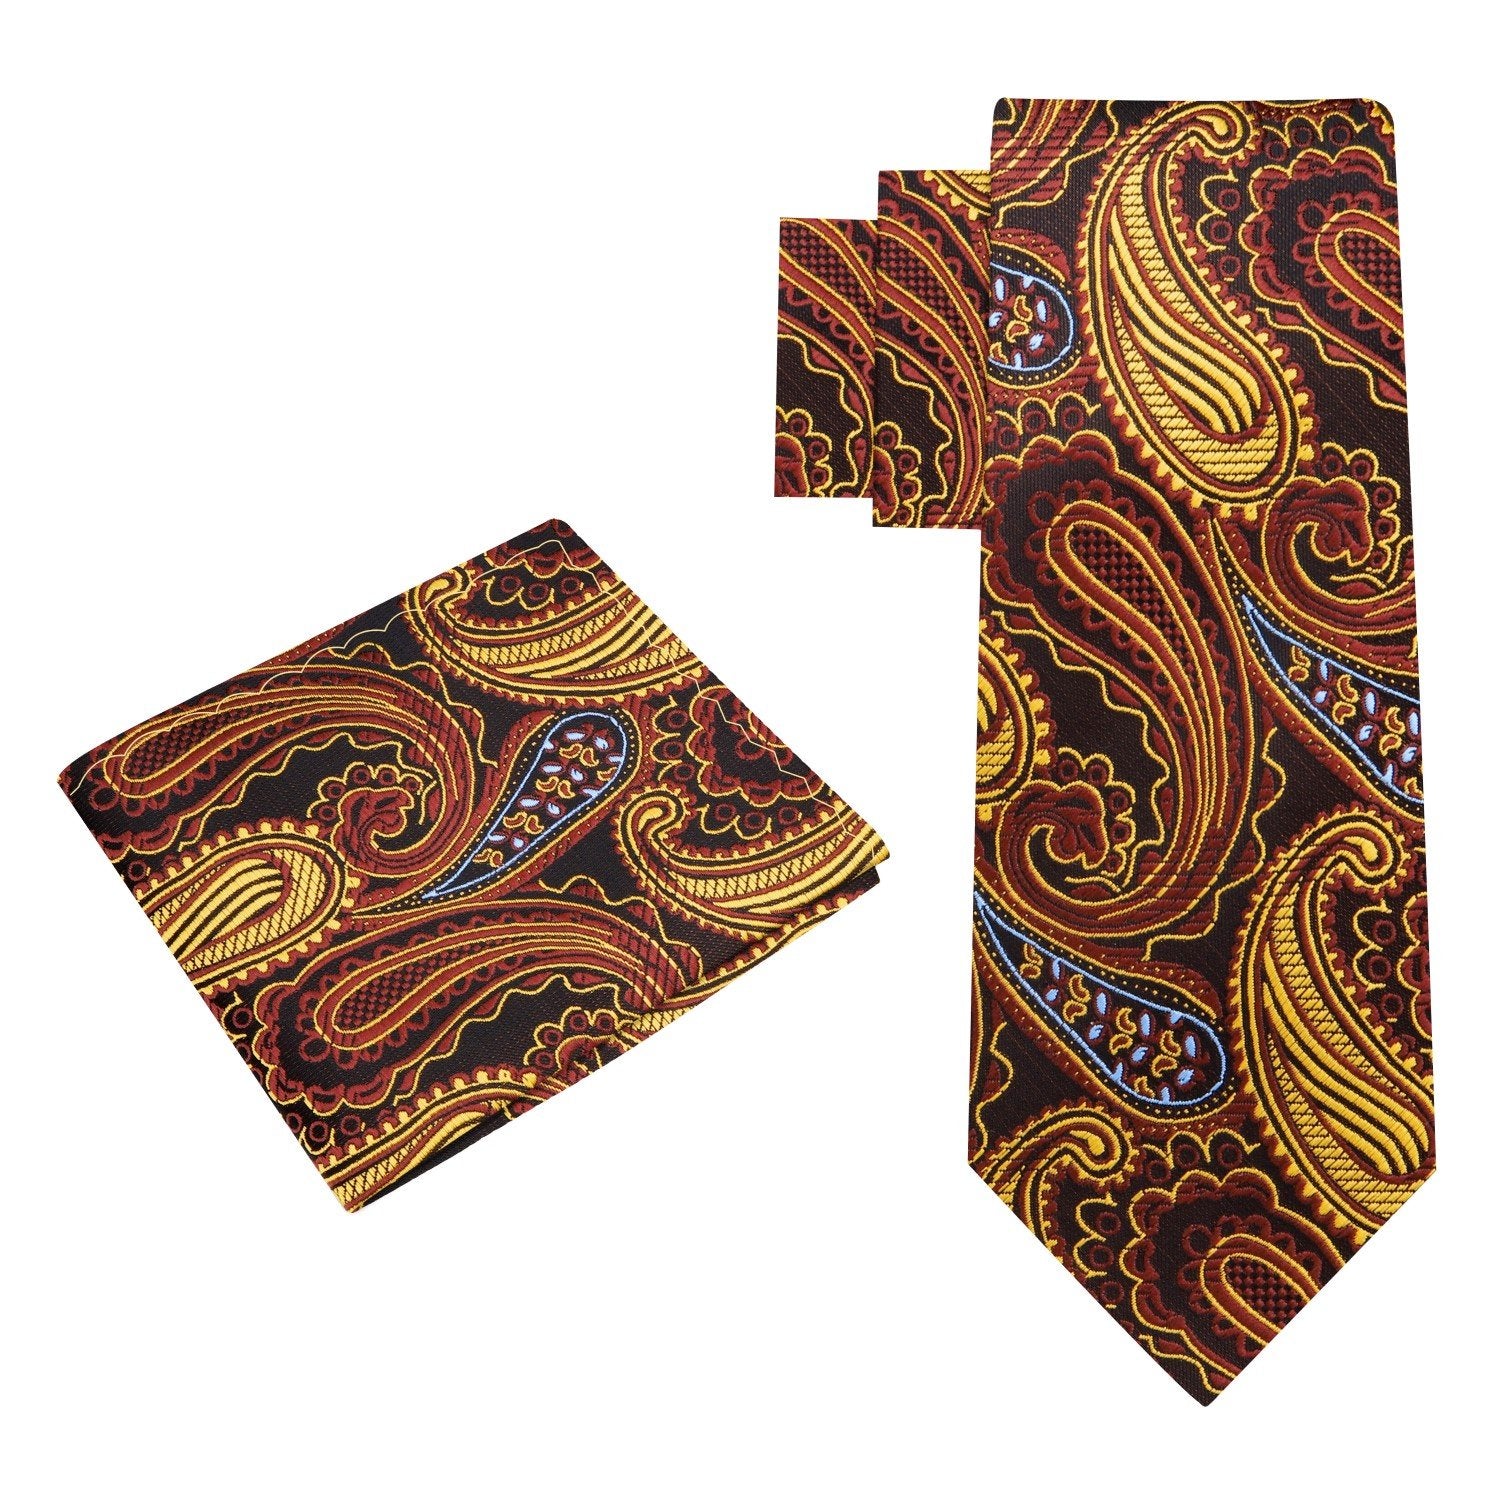 Alt View: A Blue, Brown, Gold Paisley Pattern Silk Necktie, Matching Pocket Square